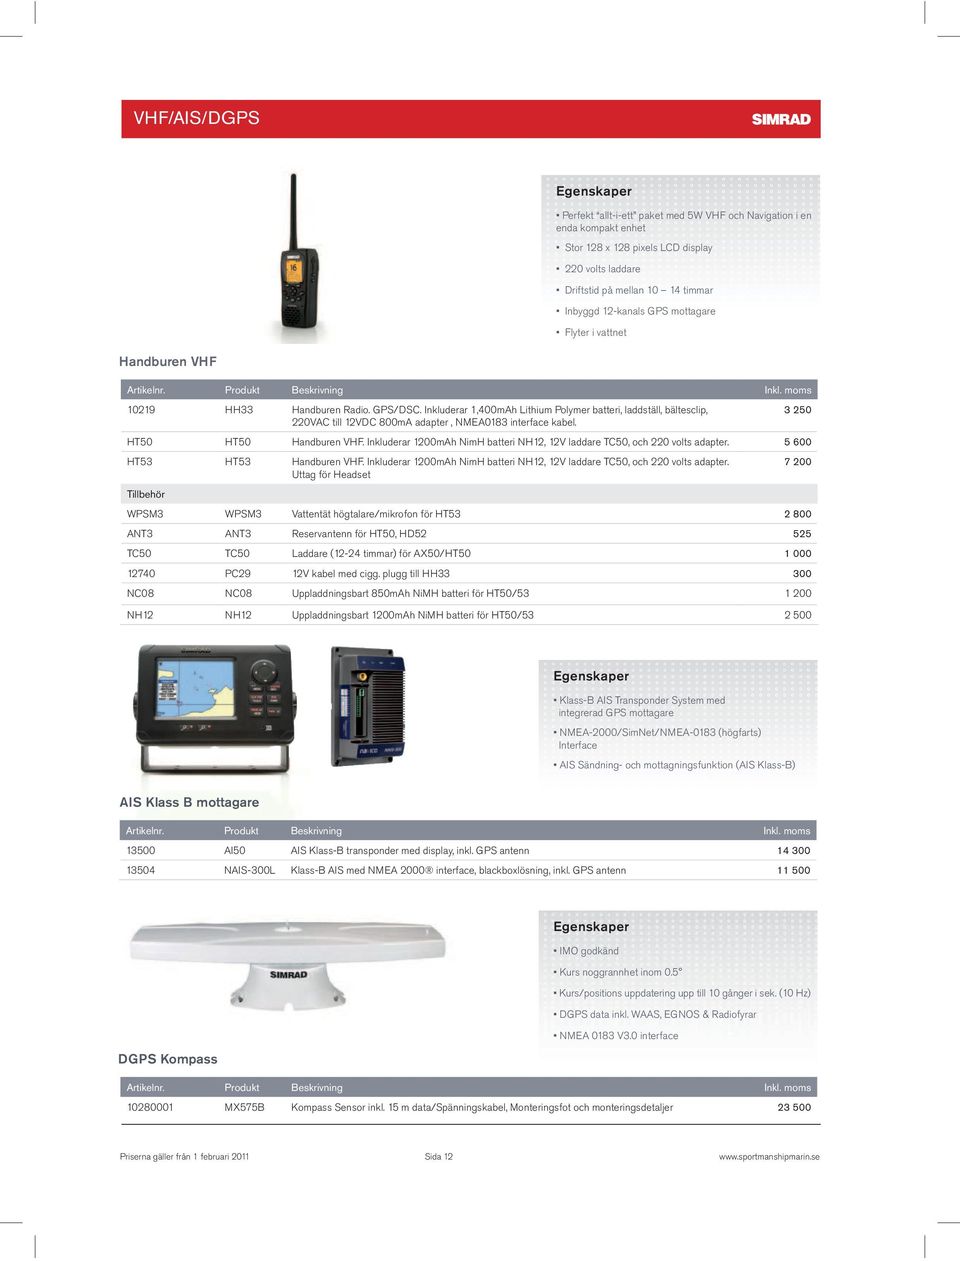 plugg till HH33 300 NC08 NC08 1 200 NH12 NH12 2 500 integrerad GPS mottagare Interface AIS Klass B mottagare 13500 AI50 AIS Klass-B transponder med display,